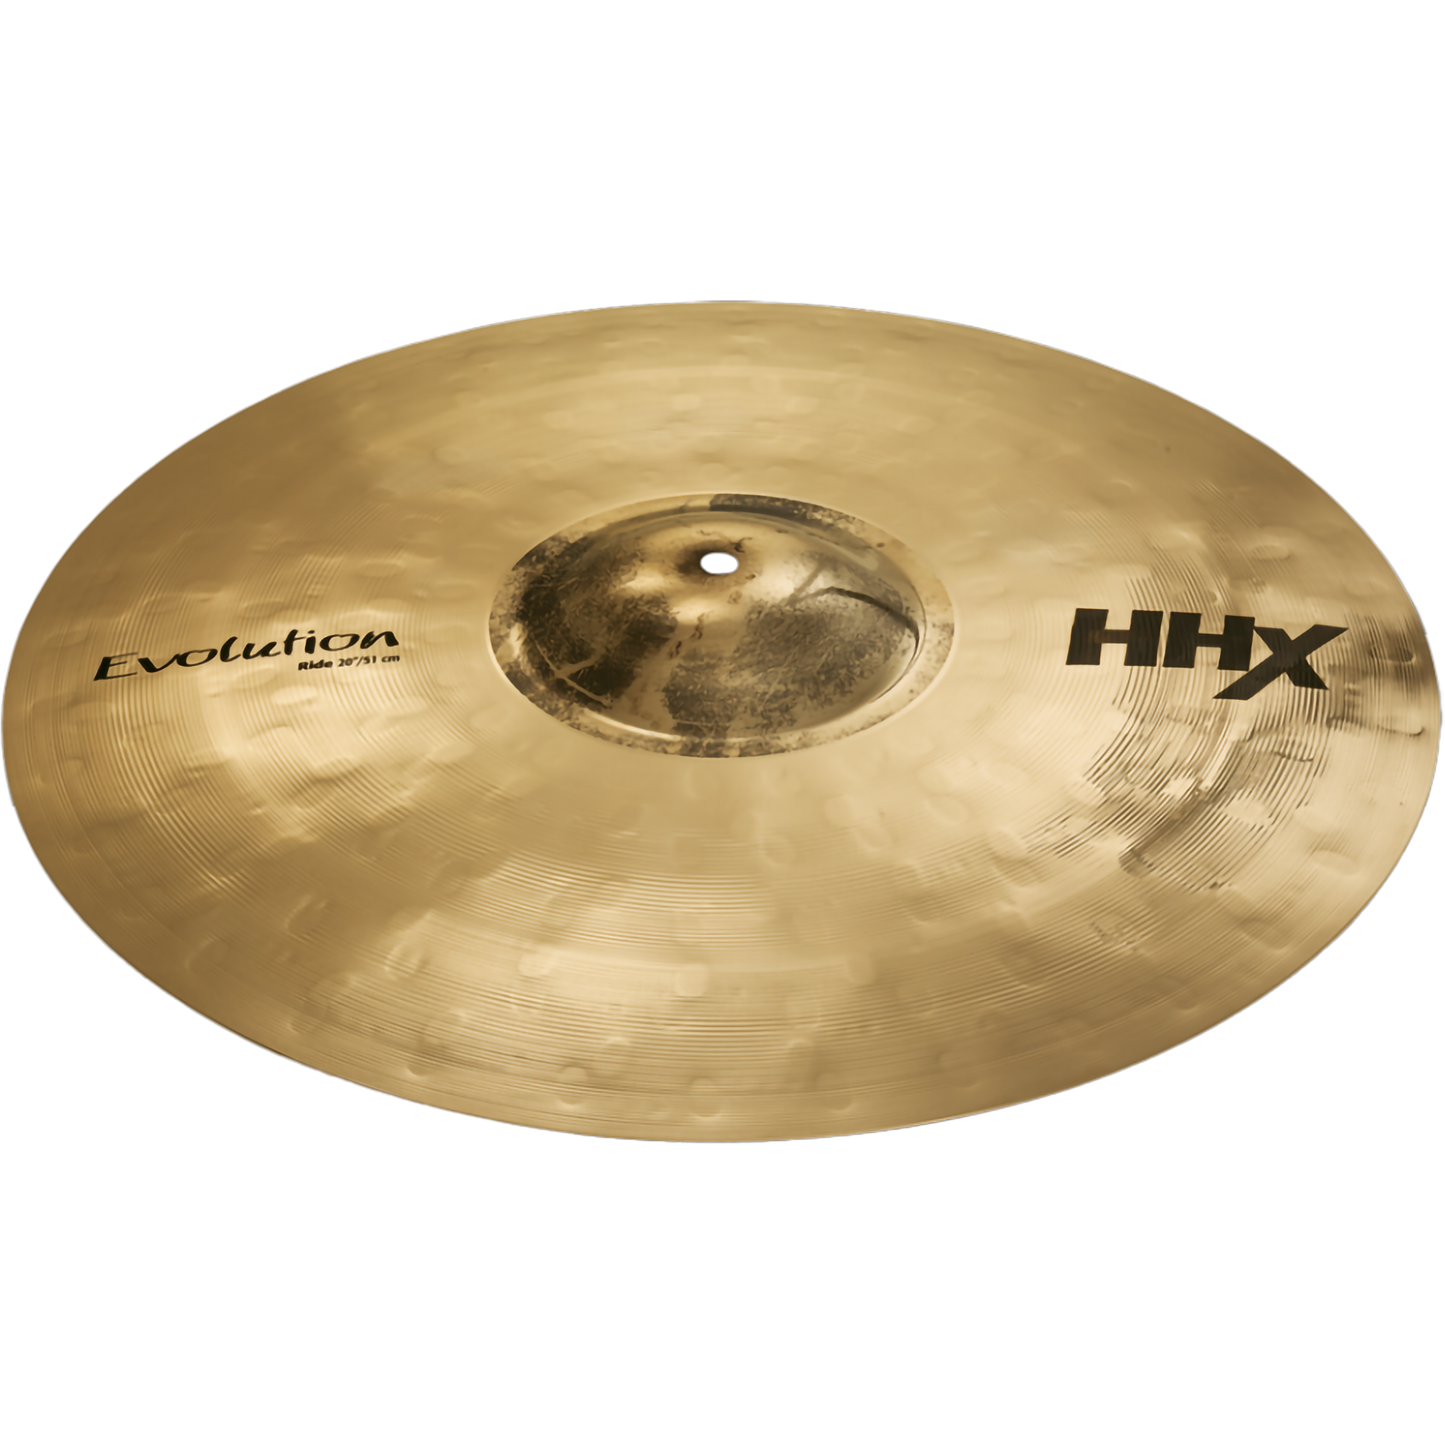 Sabian 20” HHX Evolution Ride Cymbal